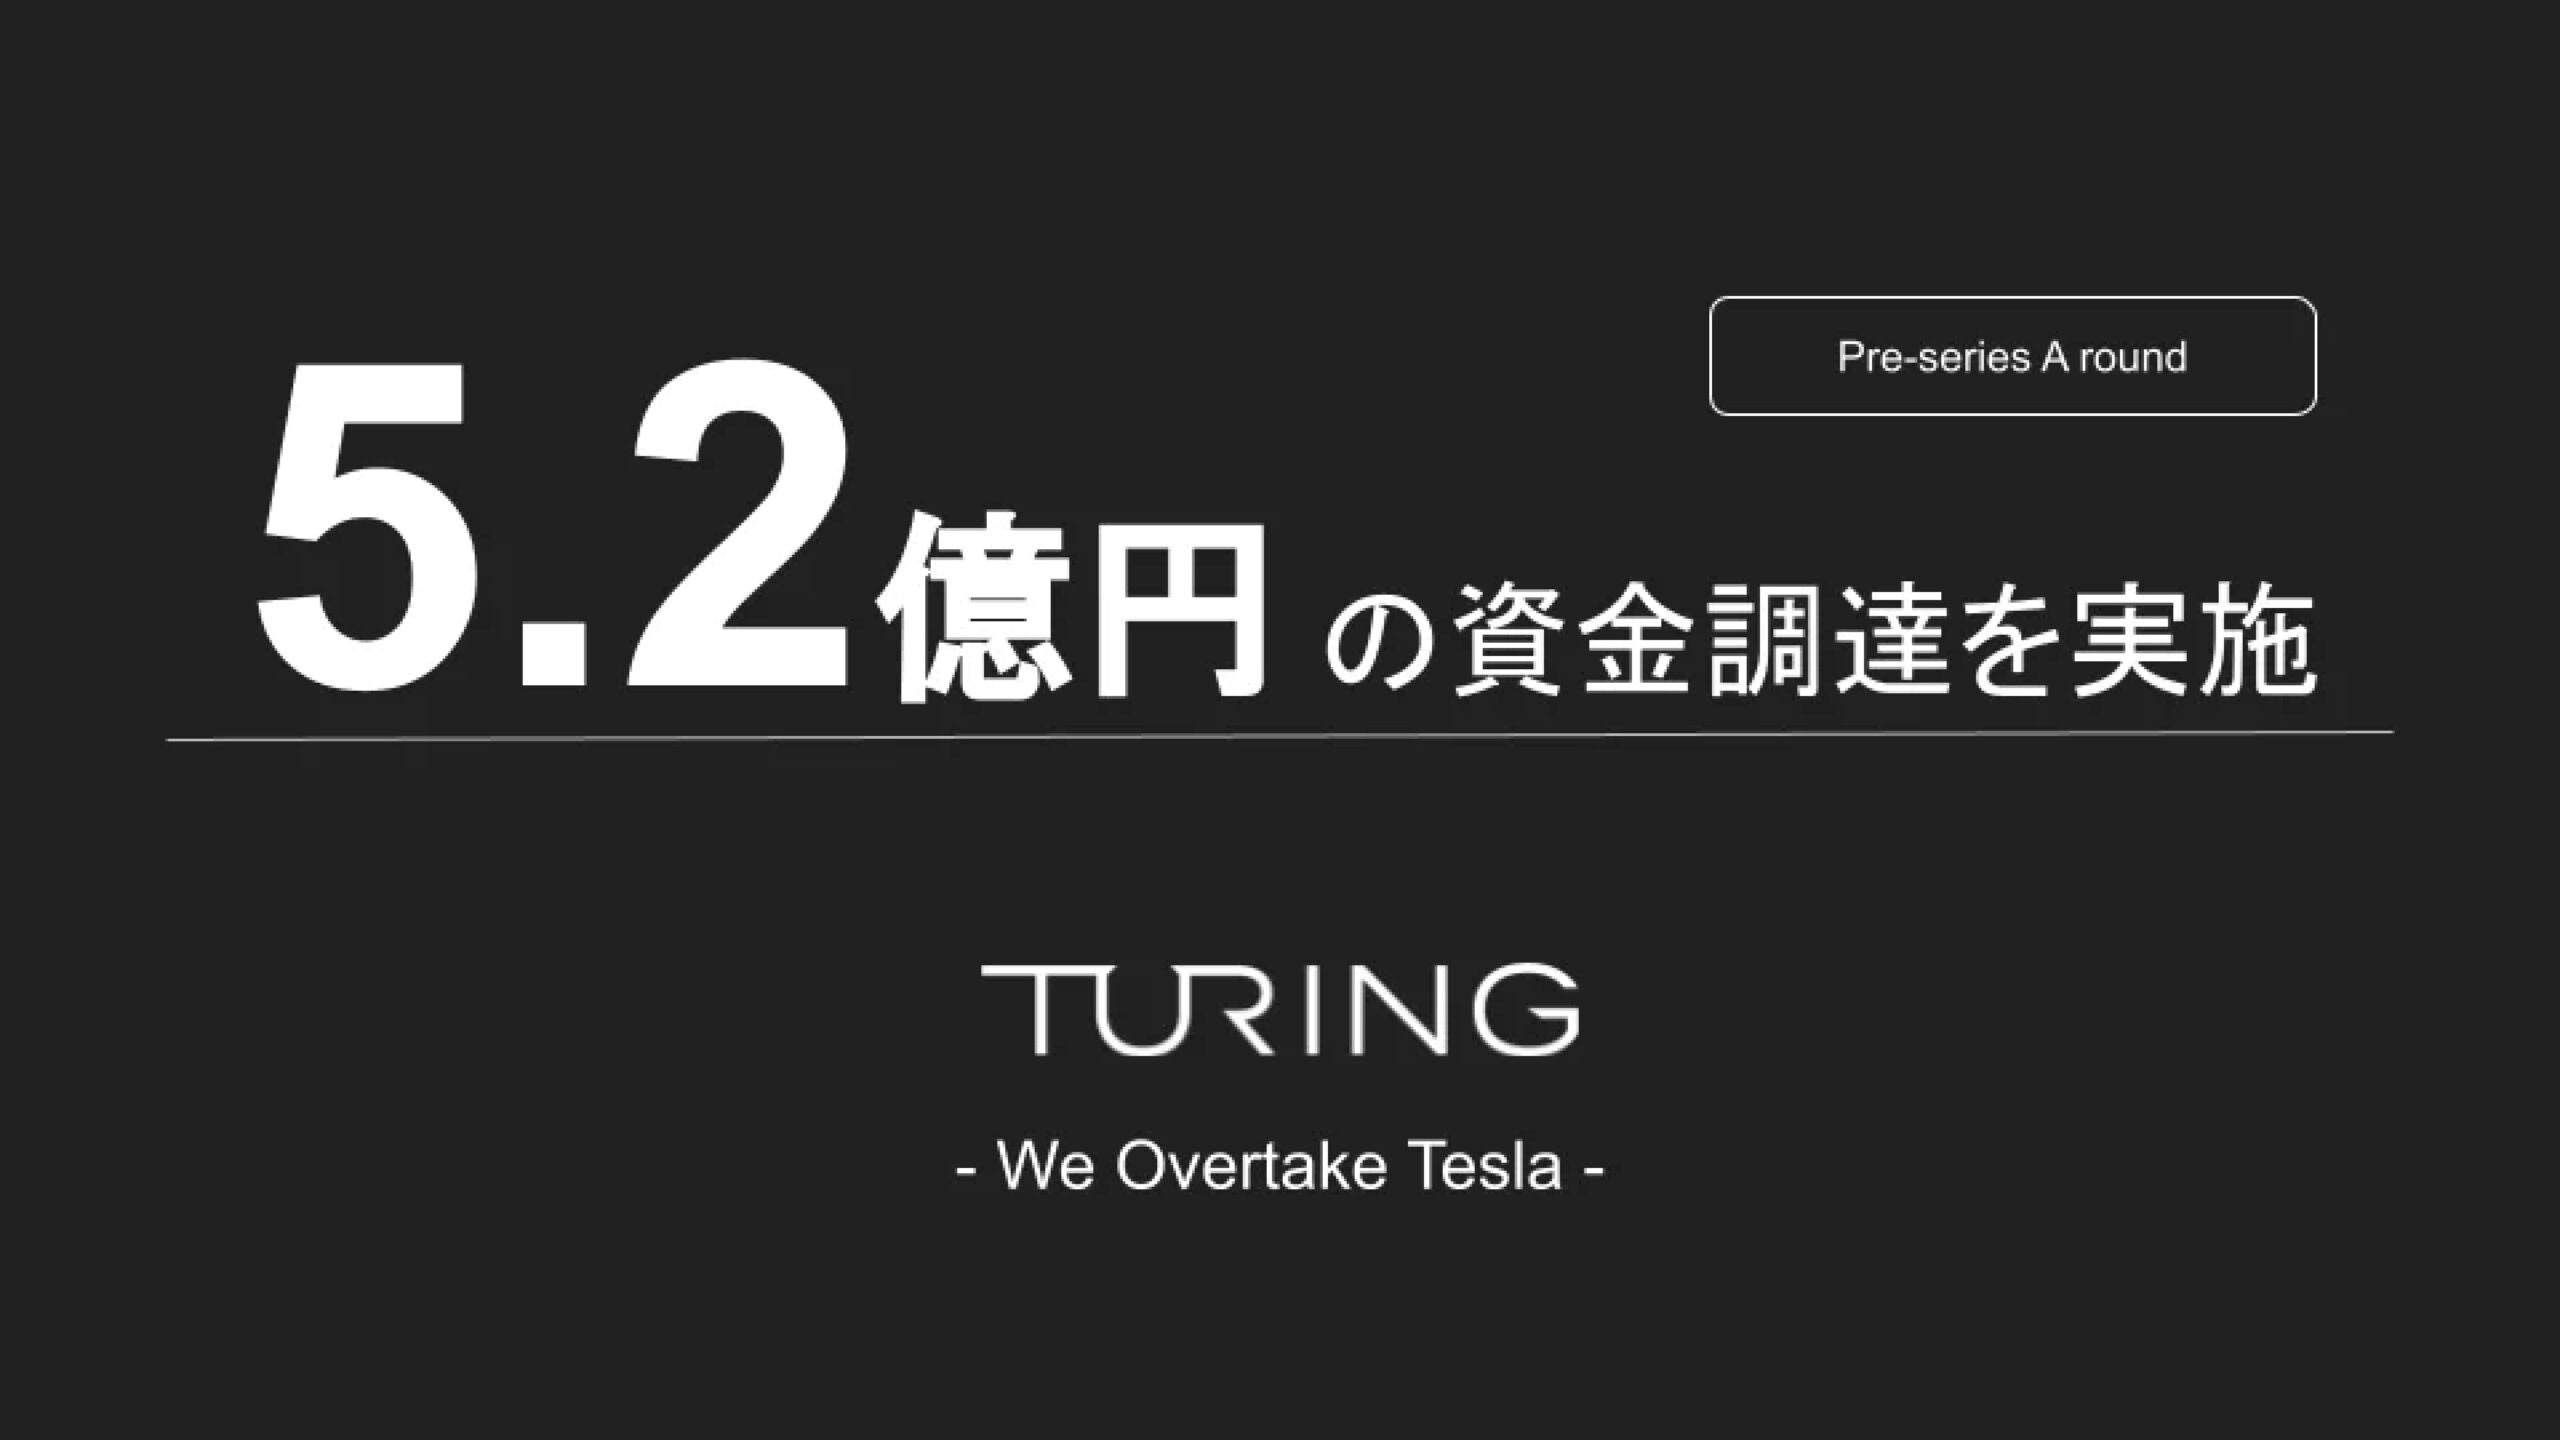 Turing株式会社、5.2億円の資金調達を実施ー累計調達額は15.2億円に